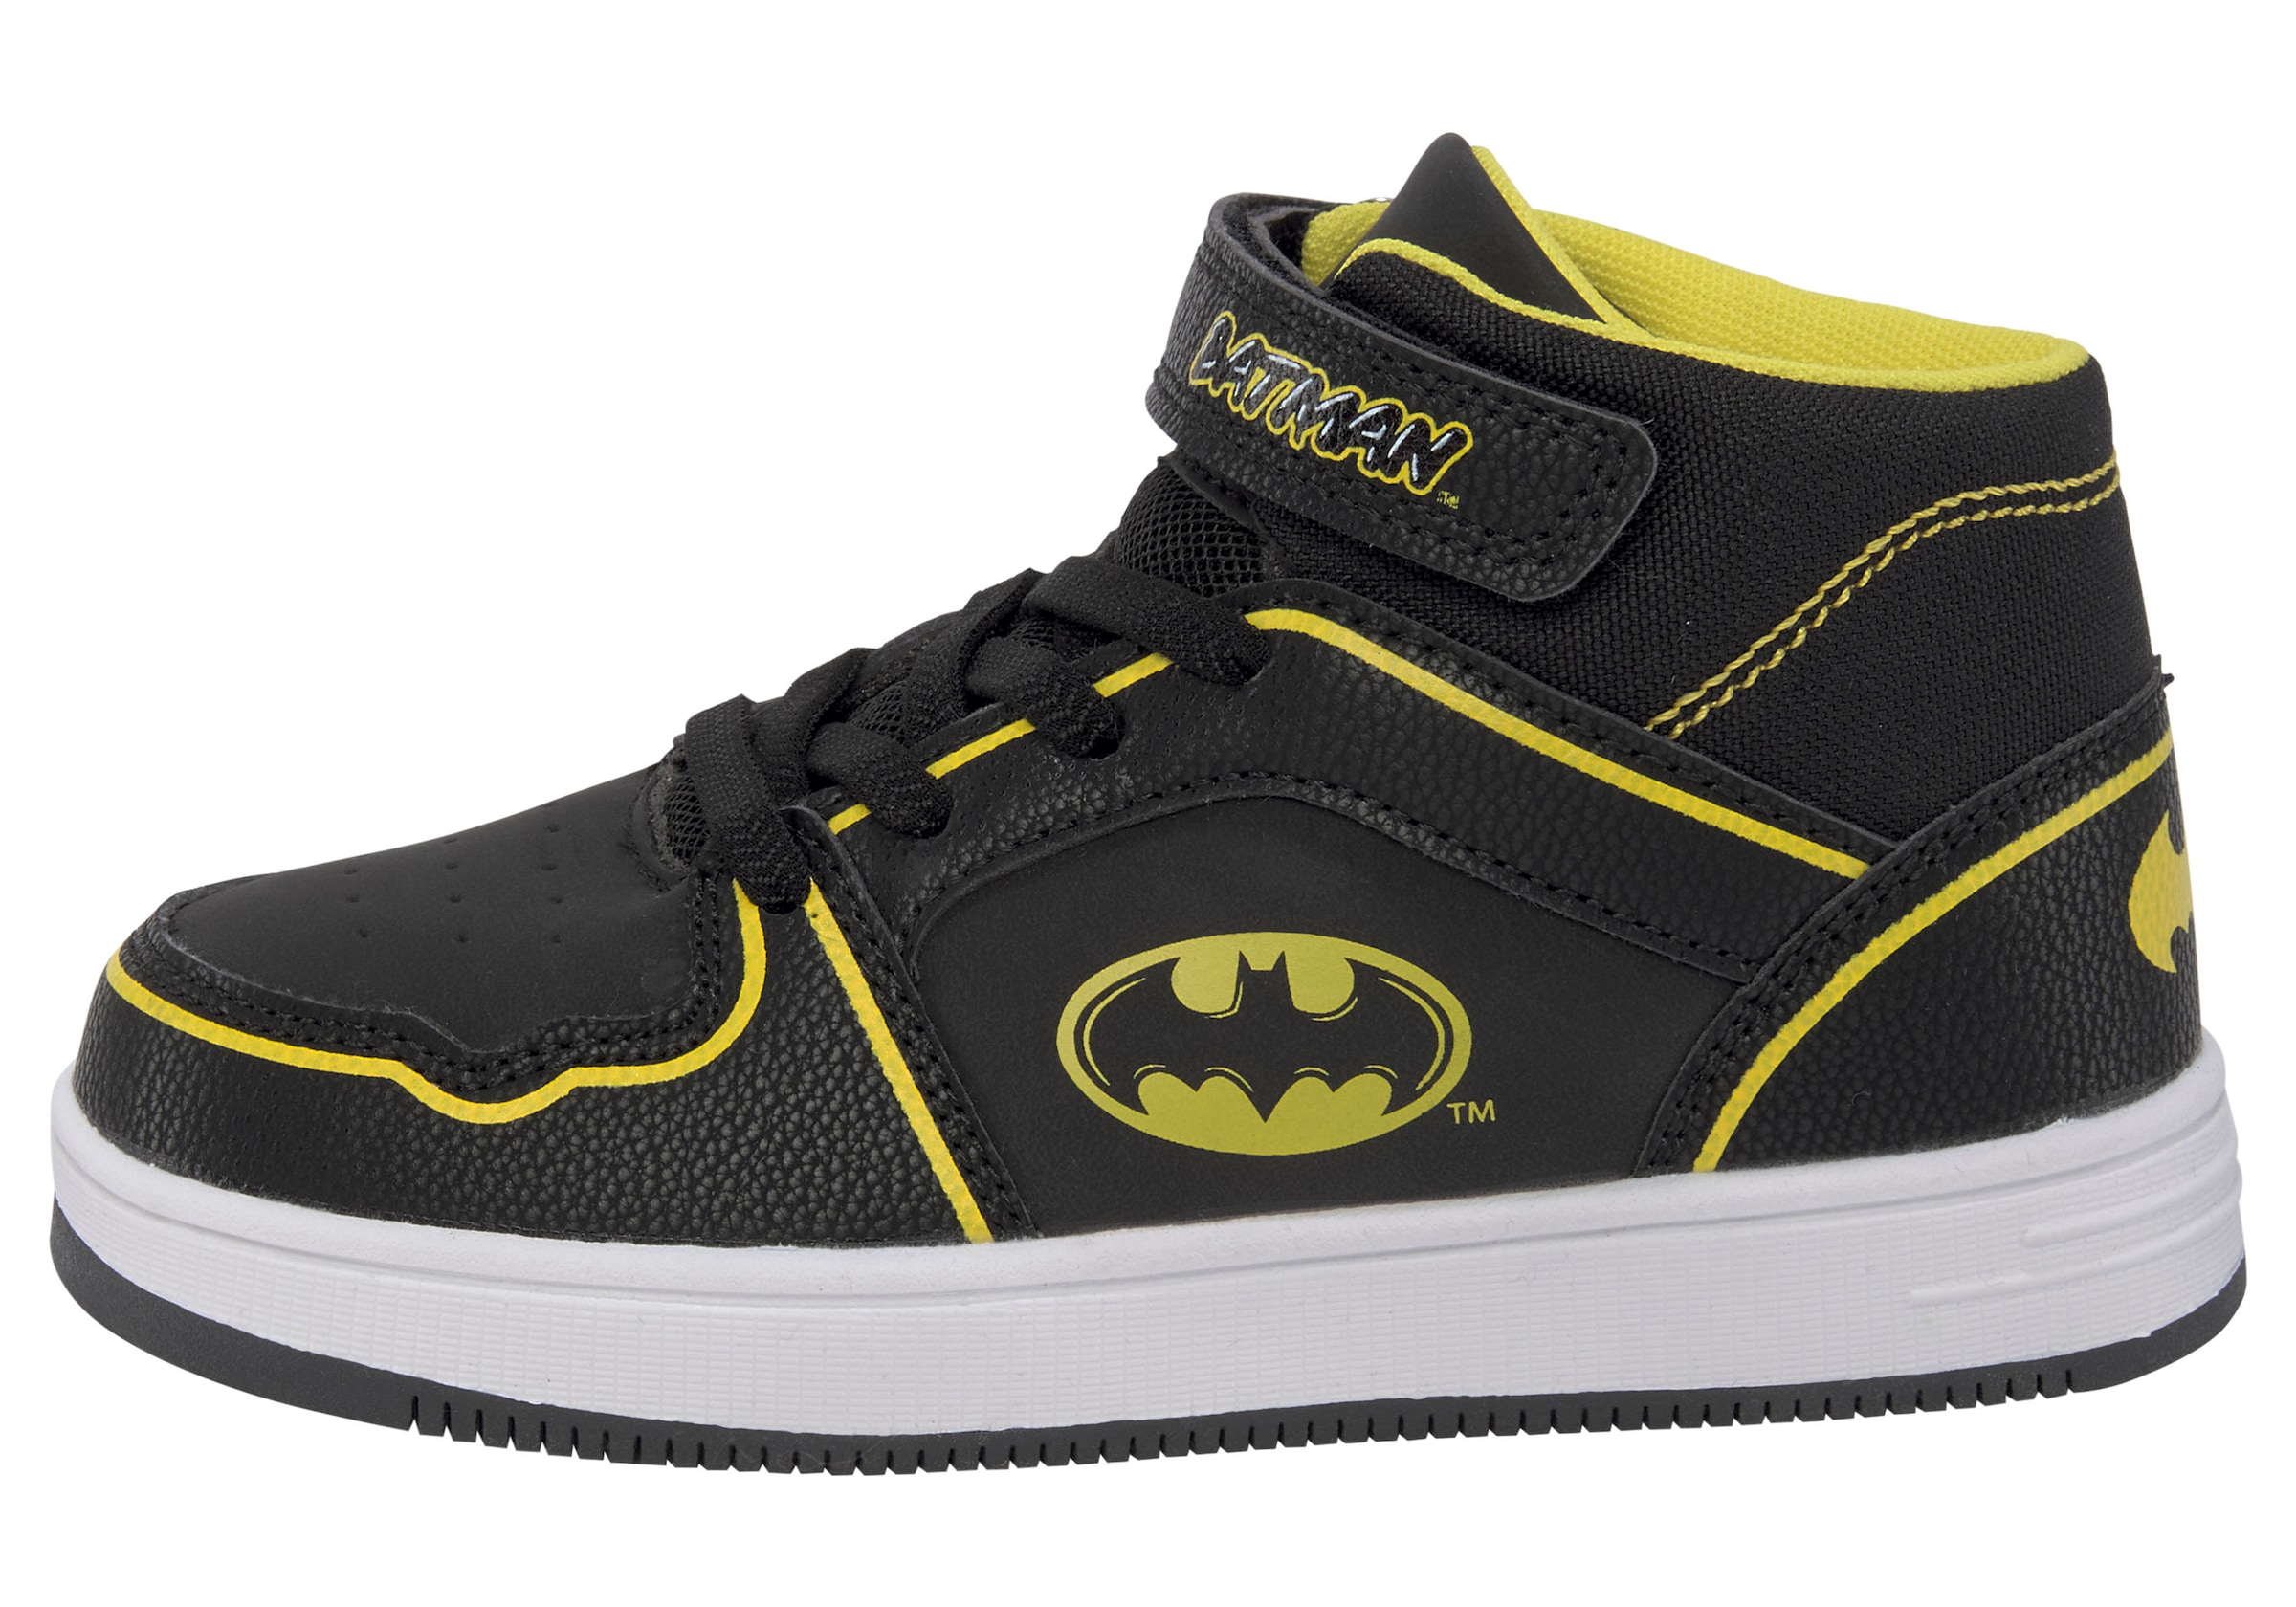 Trendige Disney Sneaker »Batman« ohne Mindestbestellwert bestellen